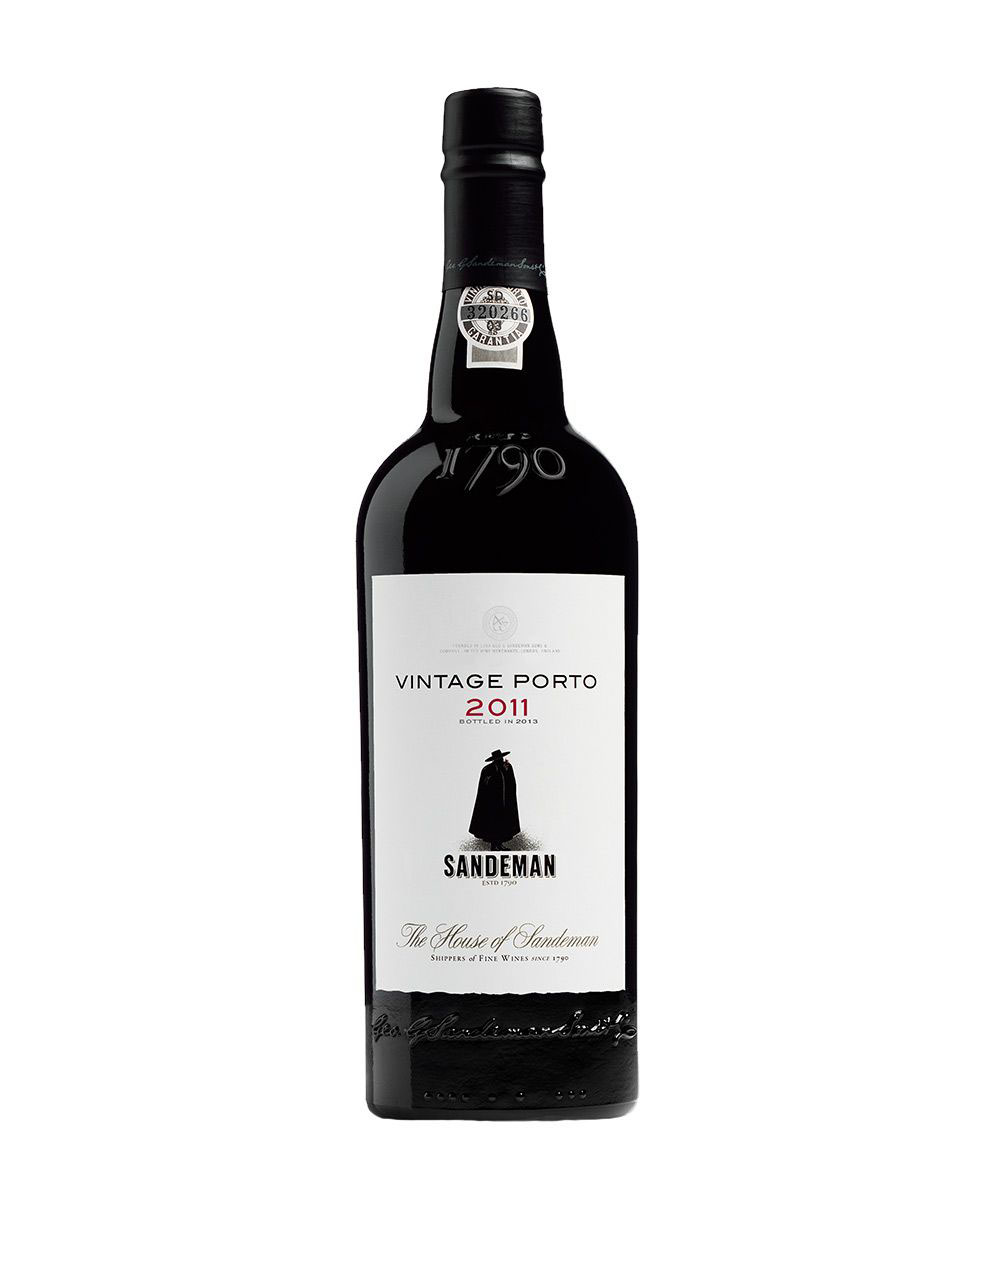 Penfolds Bin 389 Cabernet Shiraz 2015 South Australia Red wine